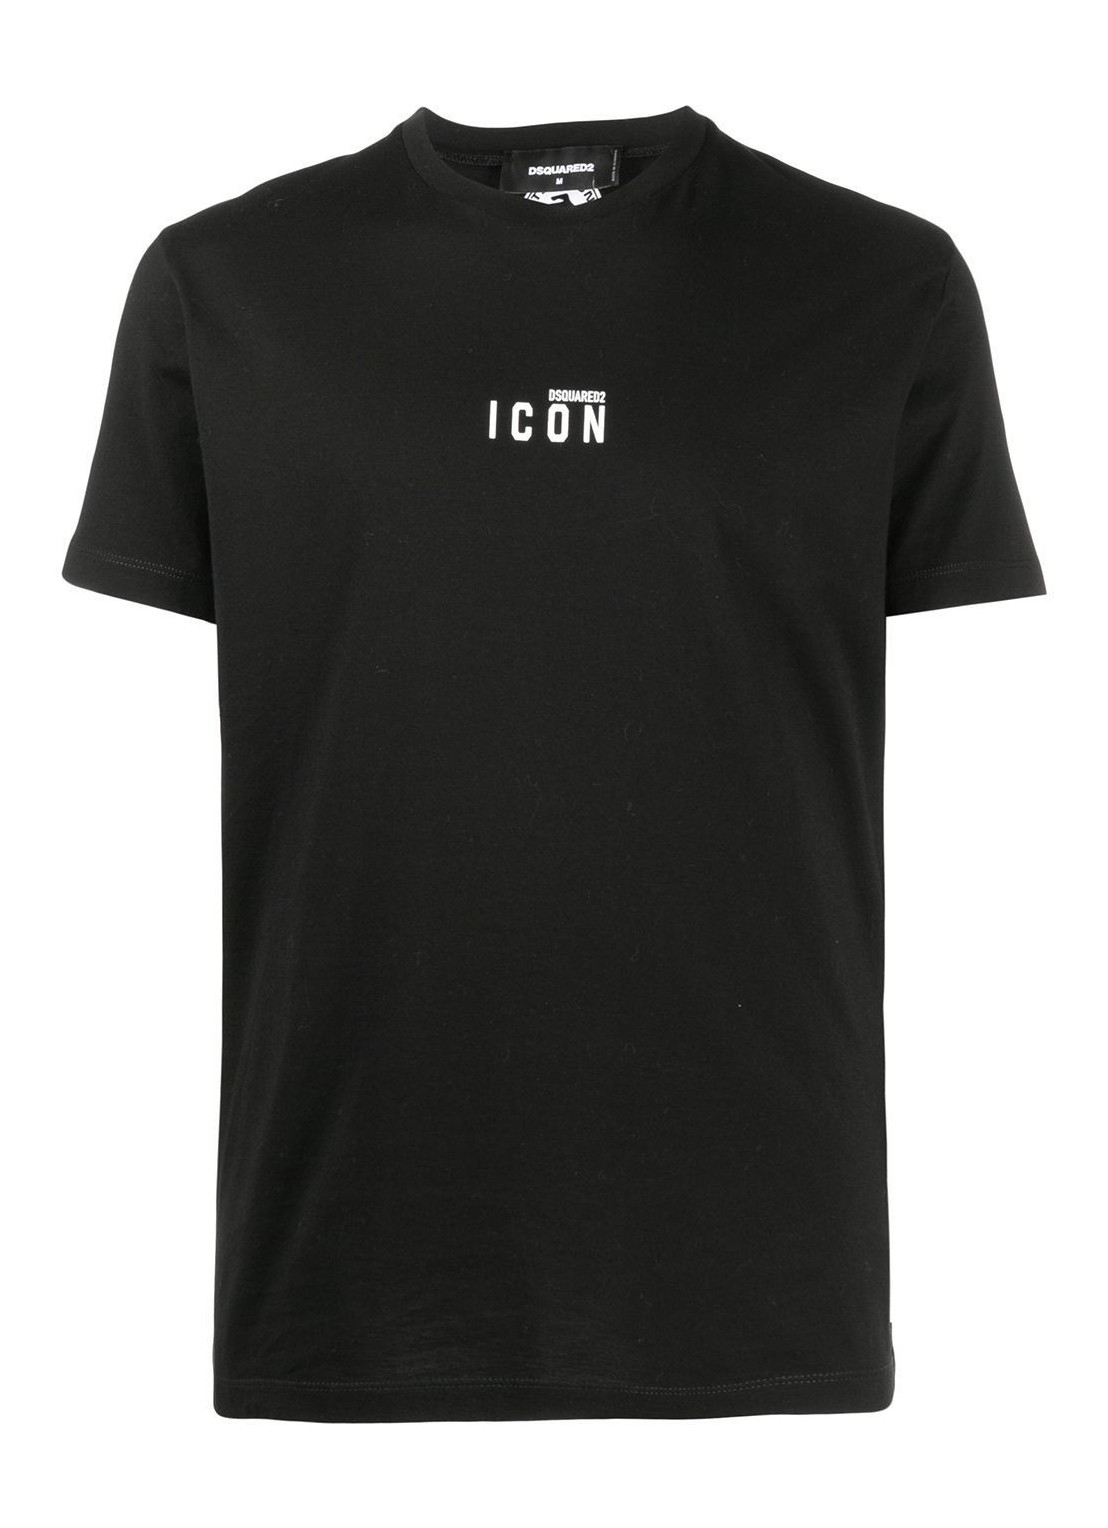 Camiseta dsquared t-shirt man cool fit s79gc0010s23009 980 talla negro
 